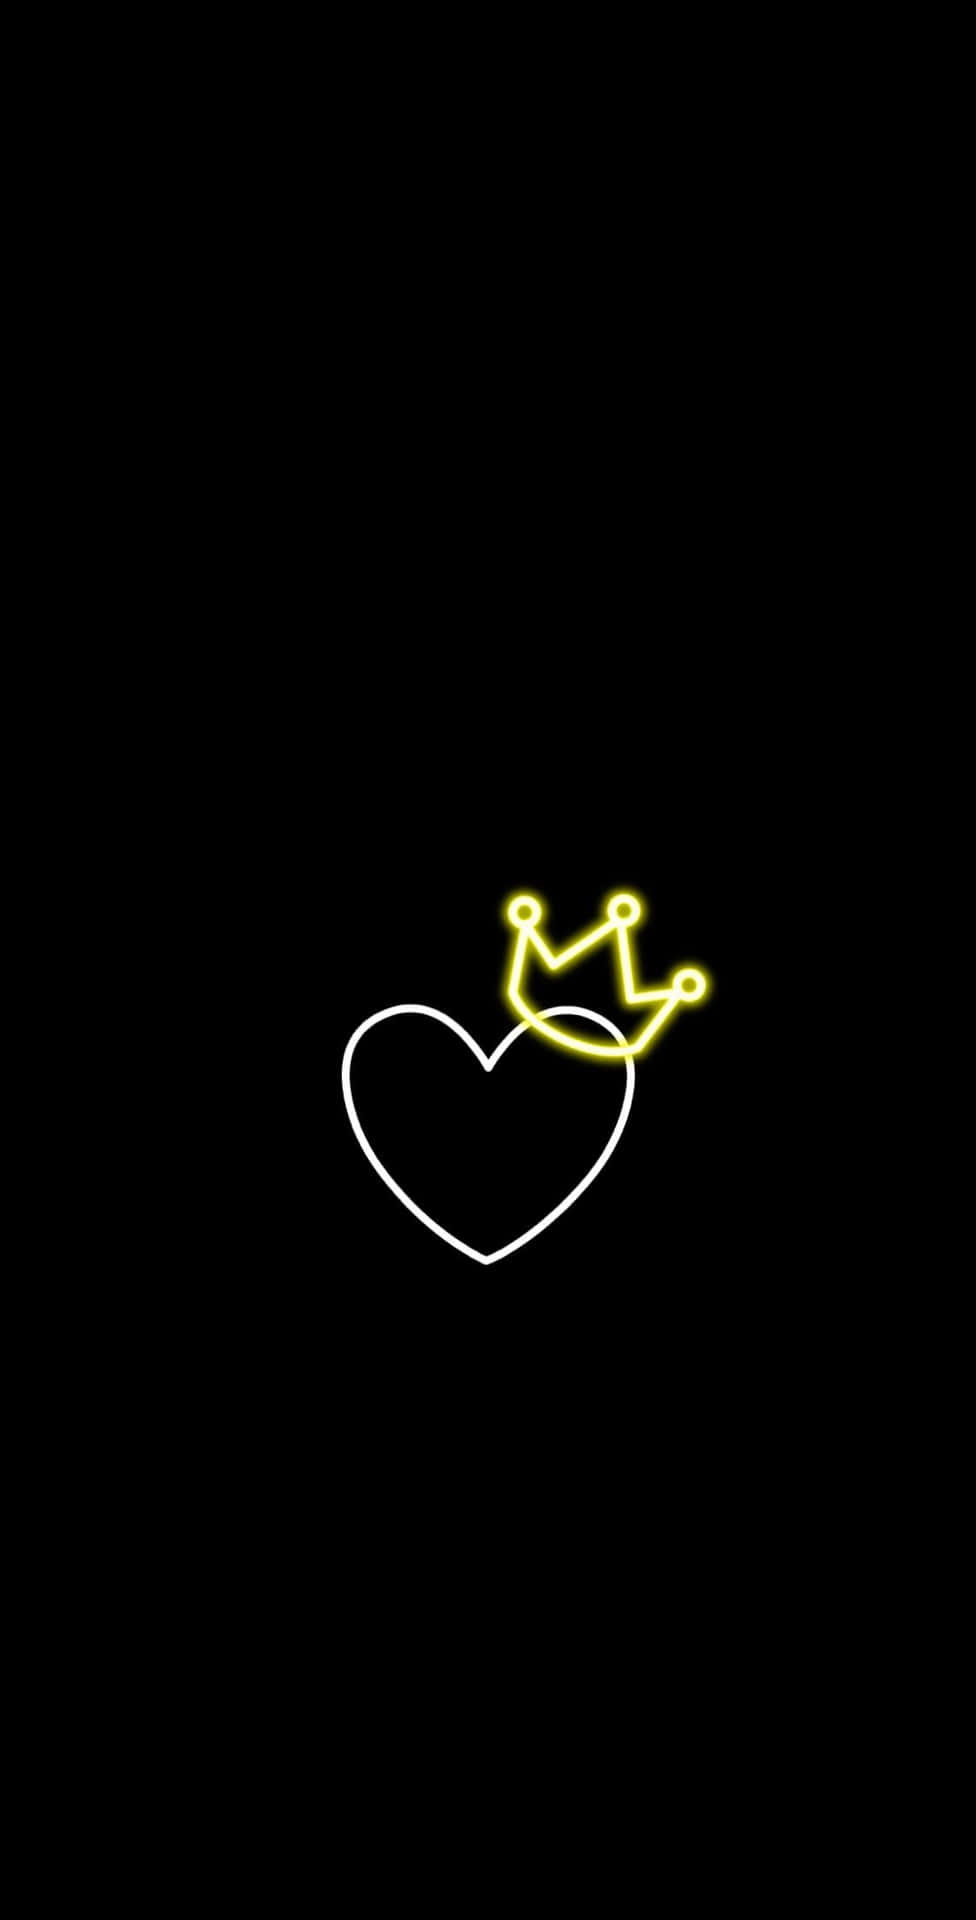 Download Cute Crown Black Heart Iphone Wallpaper | Wallpapers.com